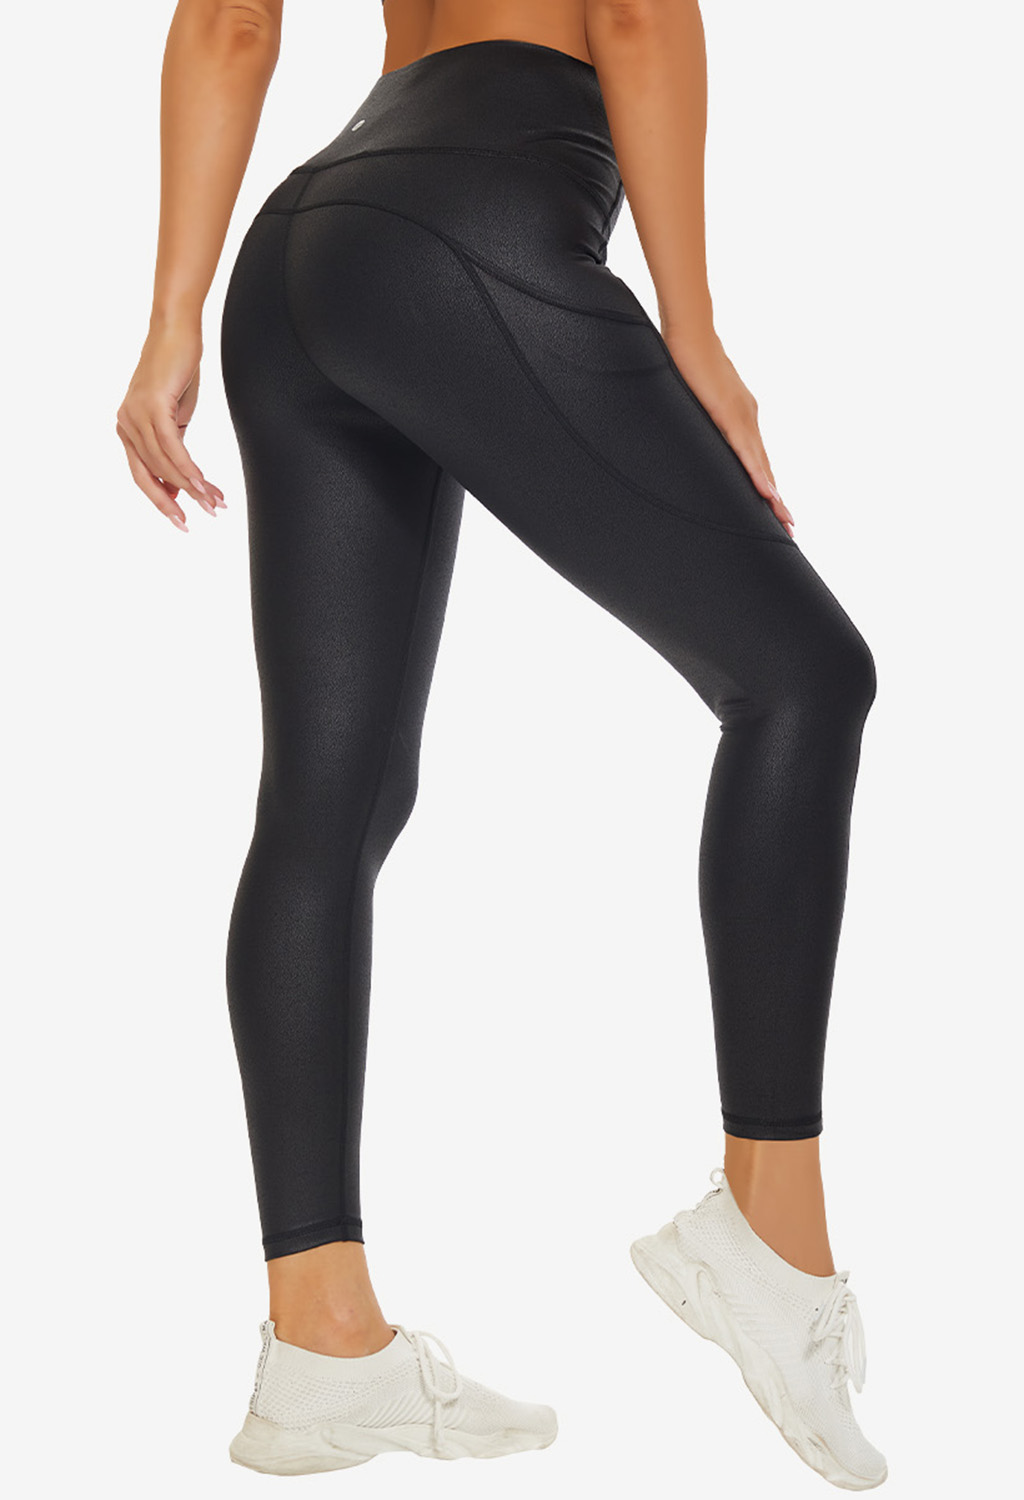 Eodora Yoga Pants with Back Pockets Women's High Waist Stretch Leggings  Black Camo M 